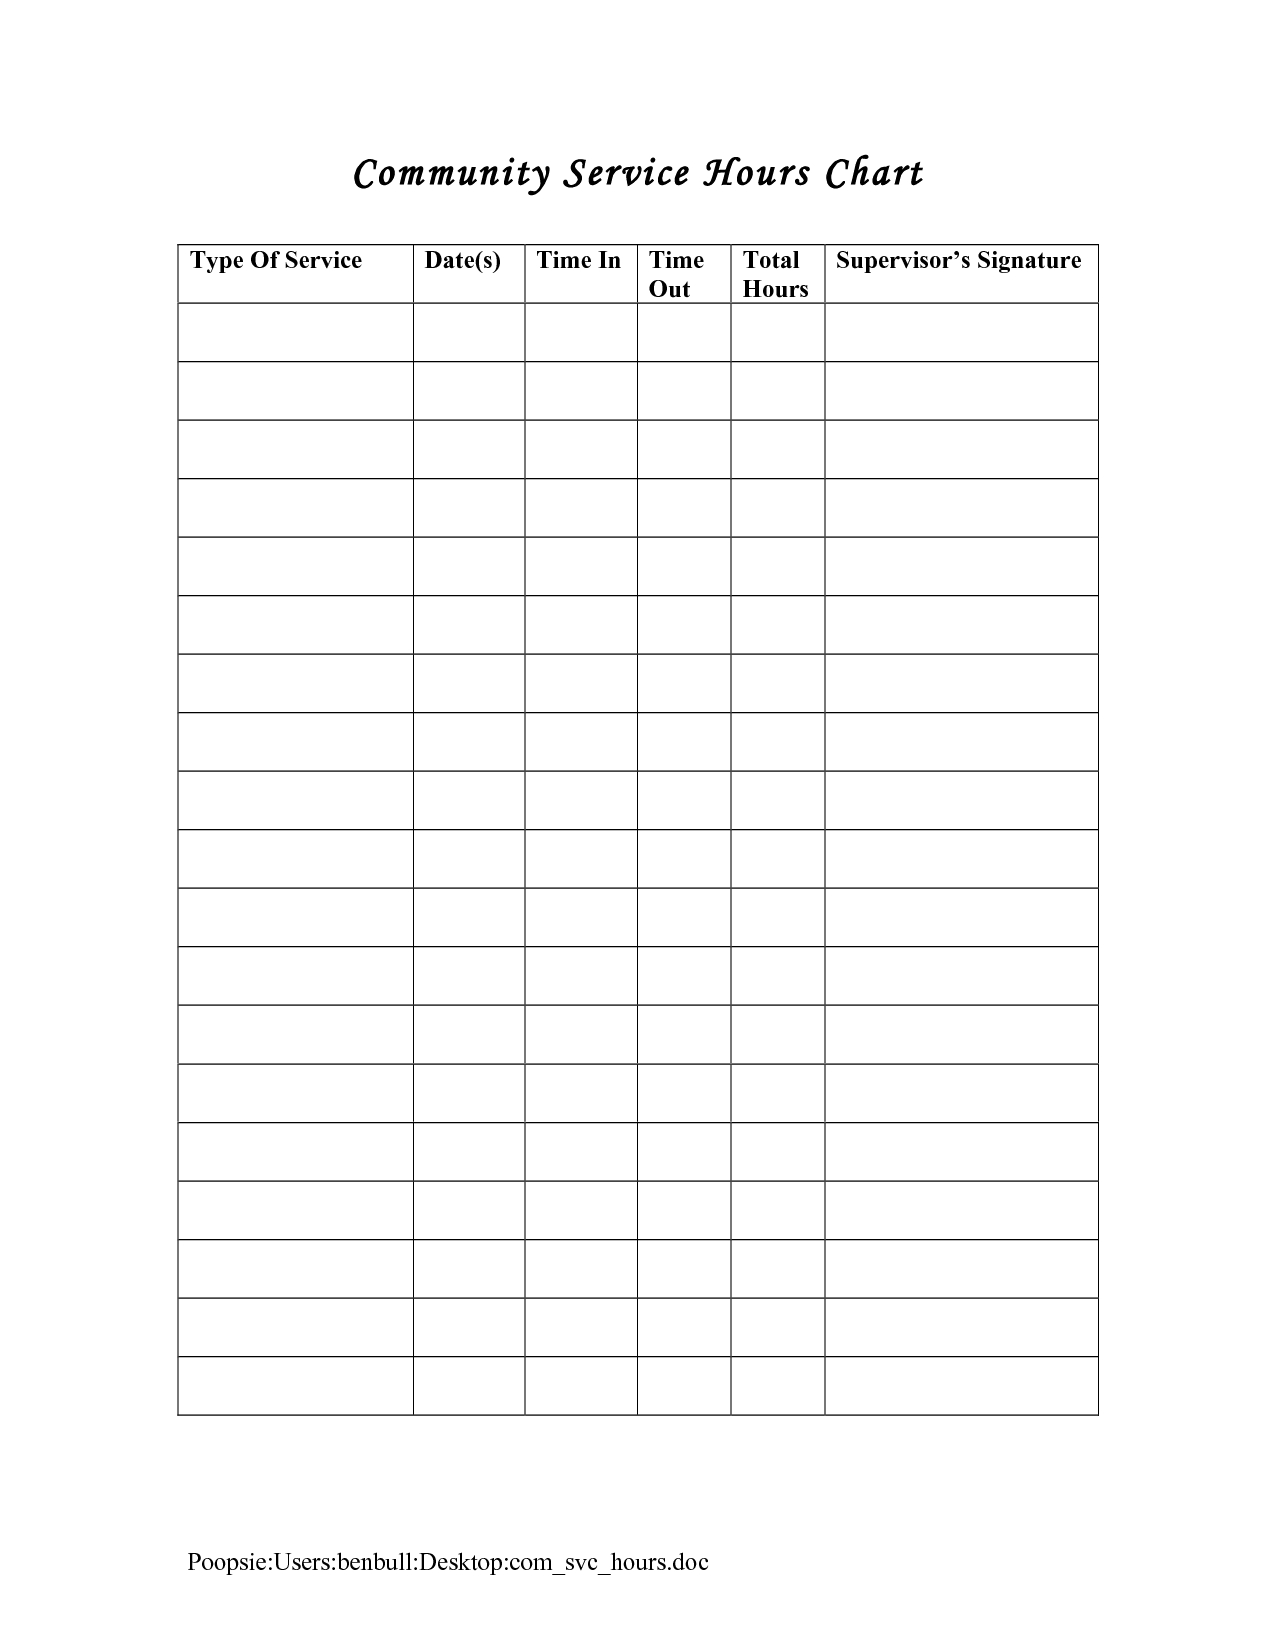 Service Hours Log Sheet Printable | Community Service Hours Chart - Free Printable Volunteer Forms